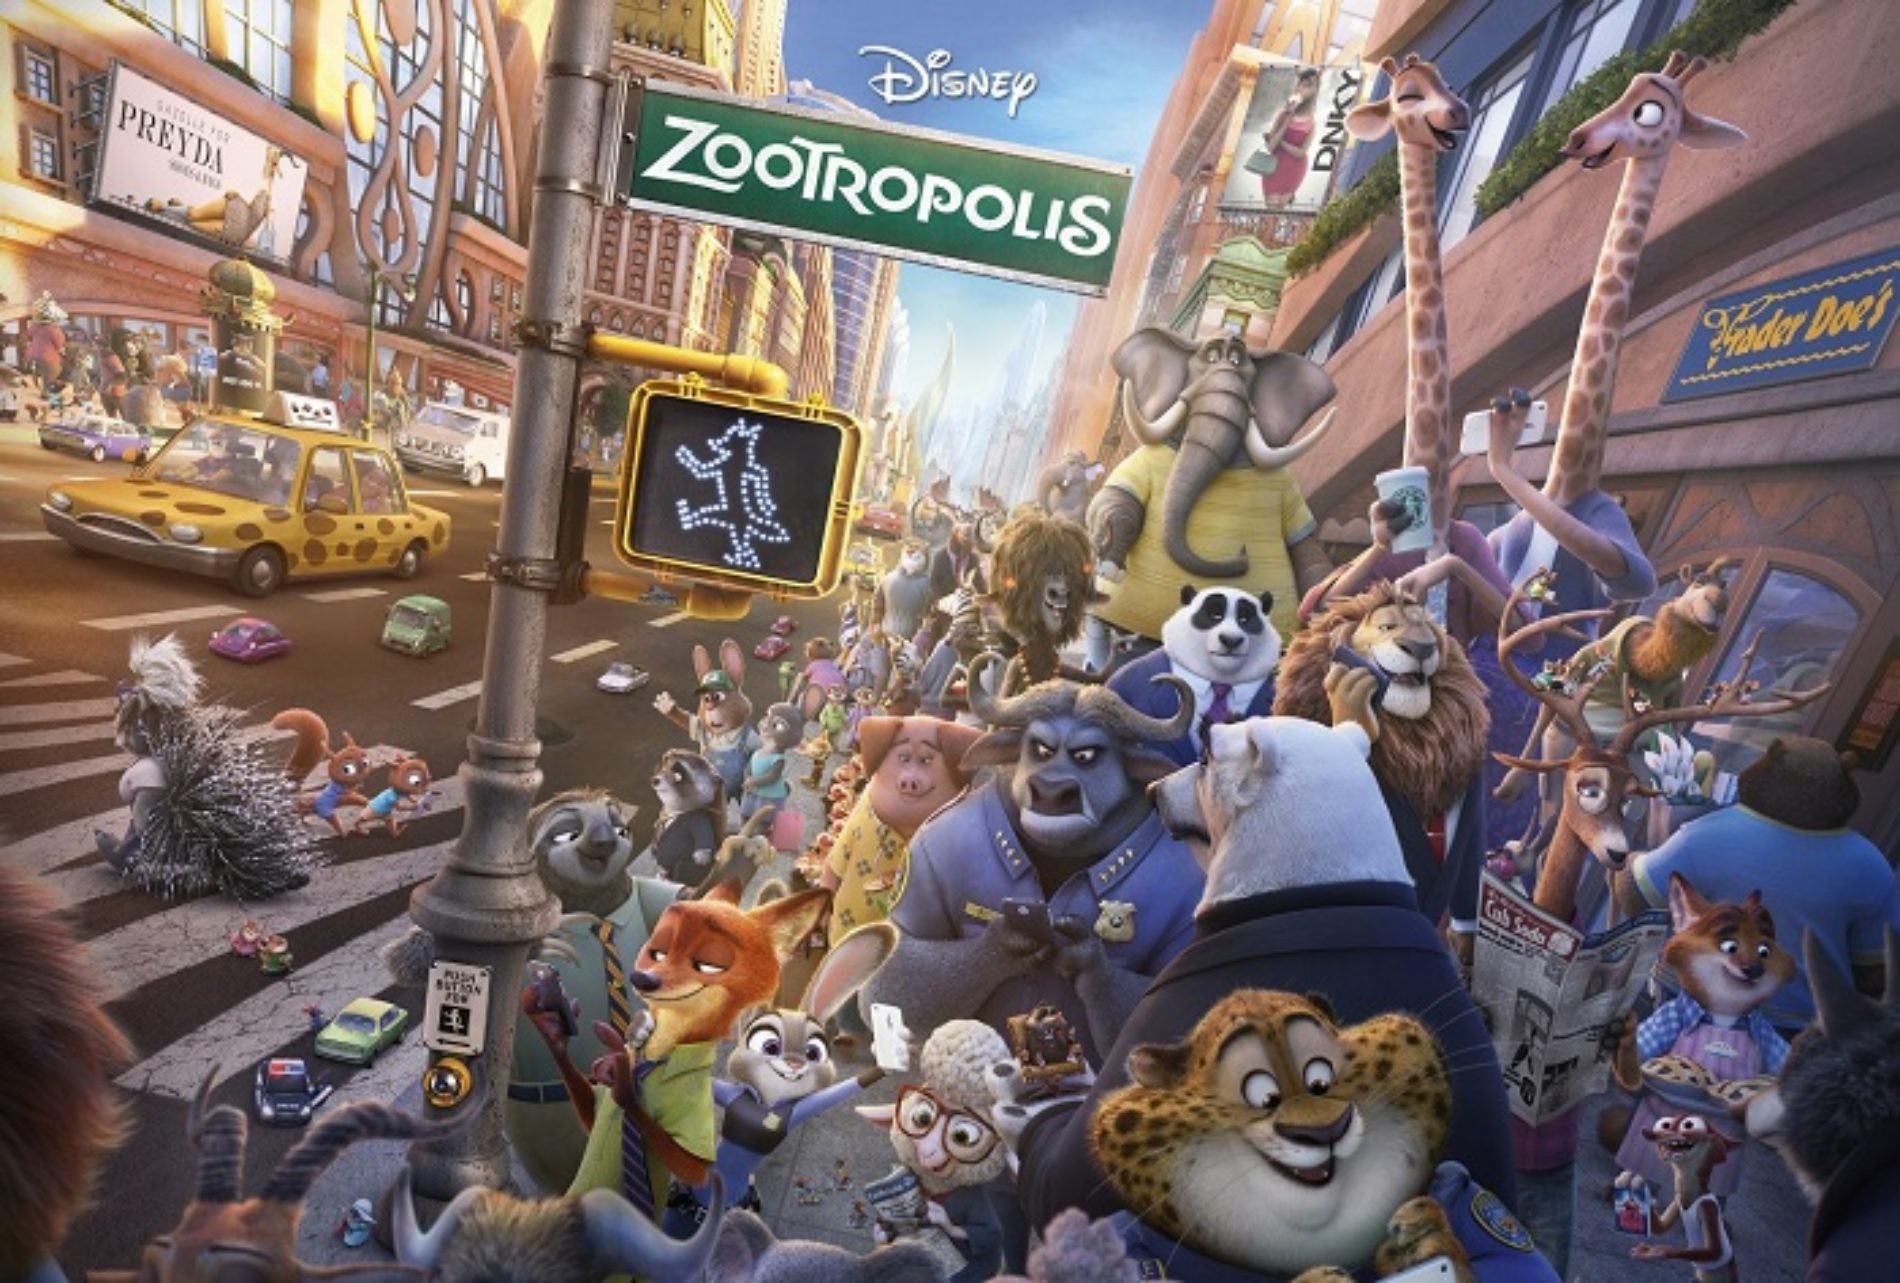 Disney’s ‘Zootopia’ has a lot of LGBT subtext